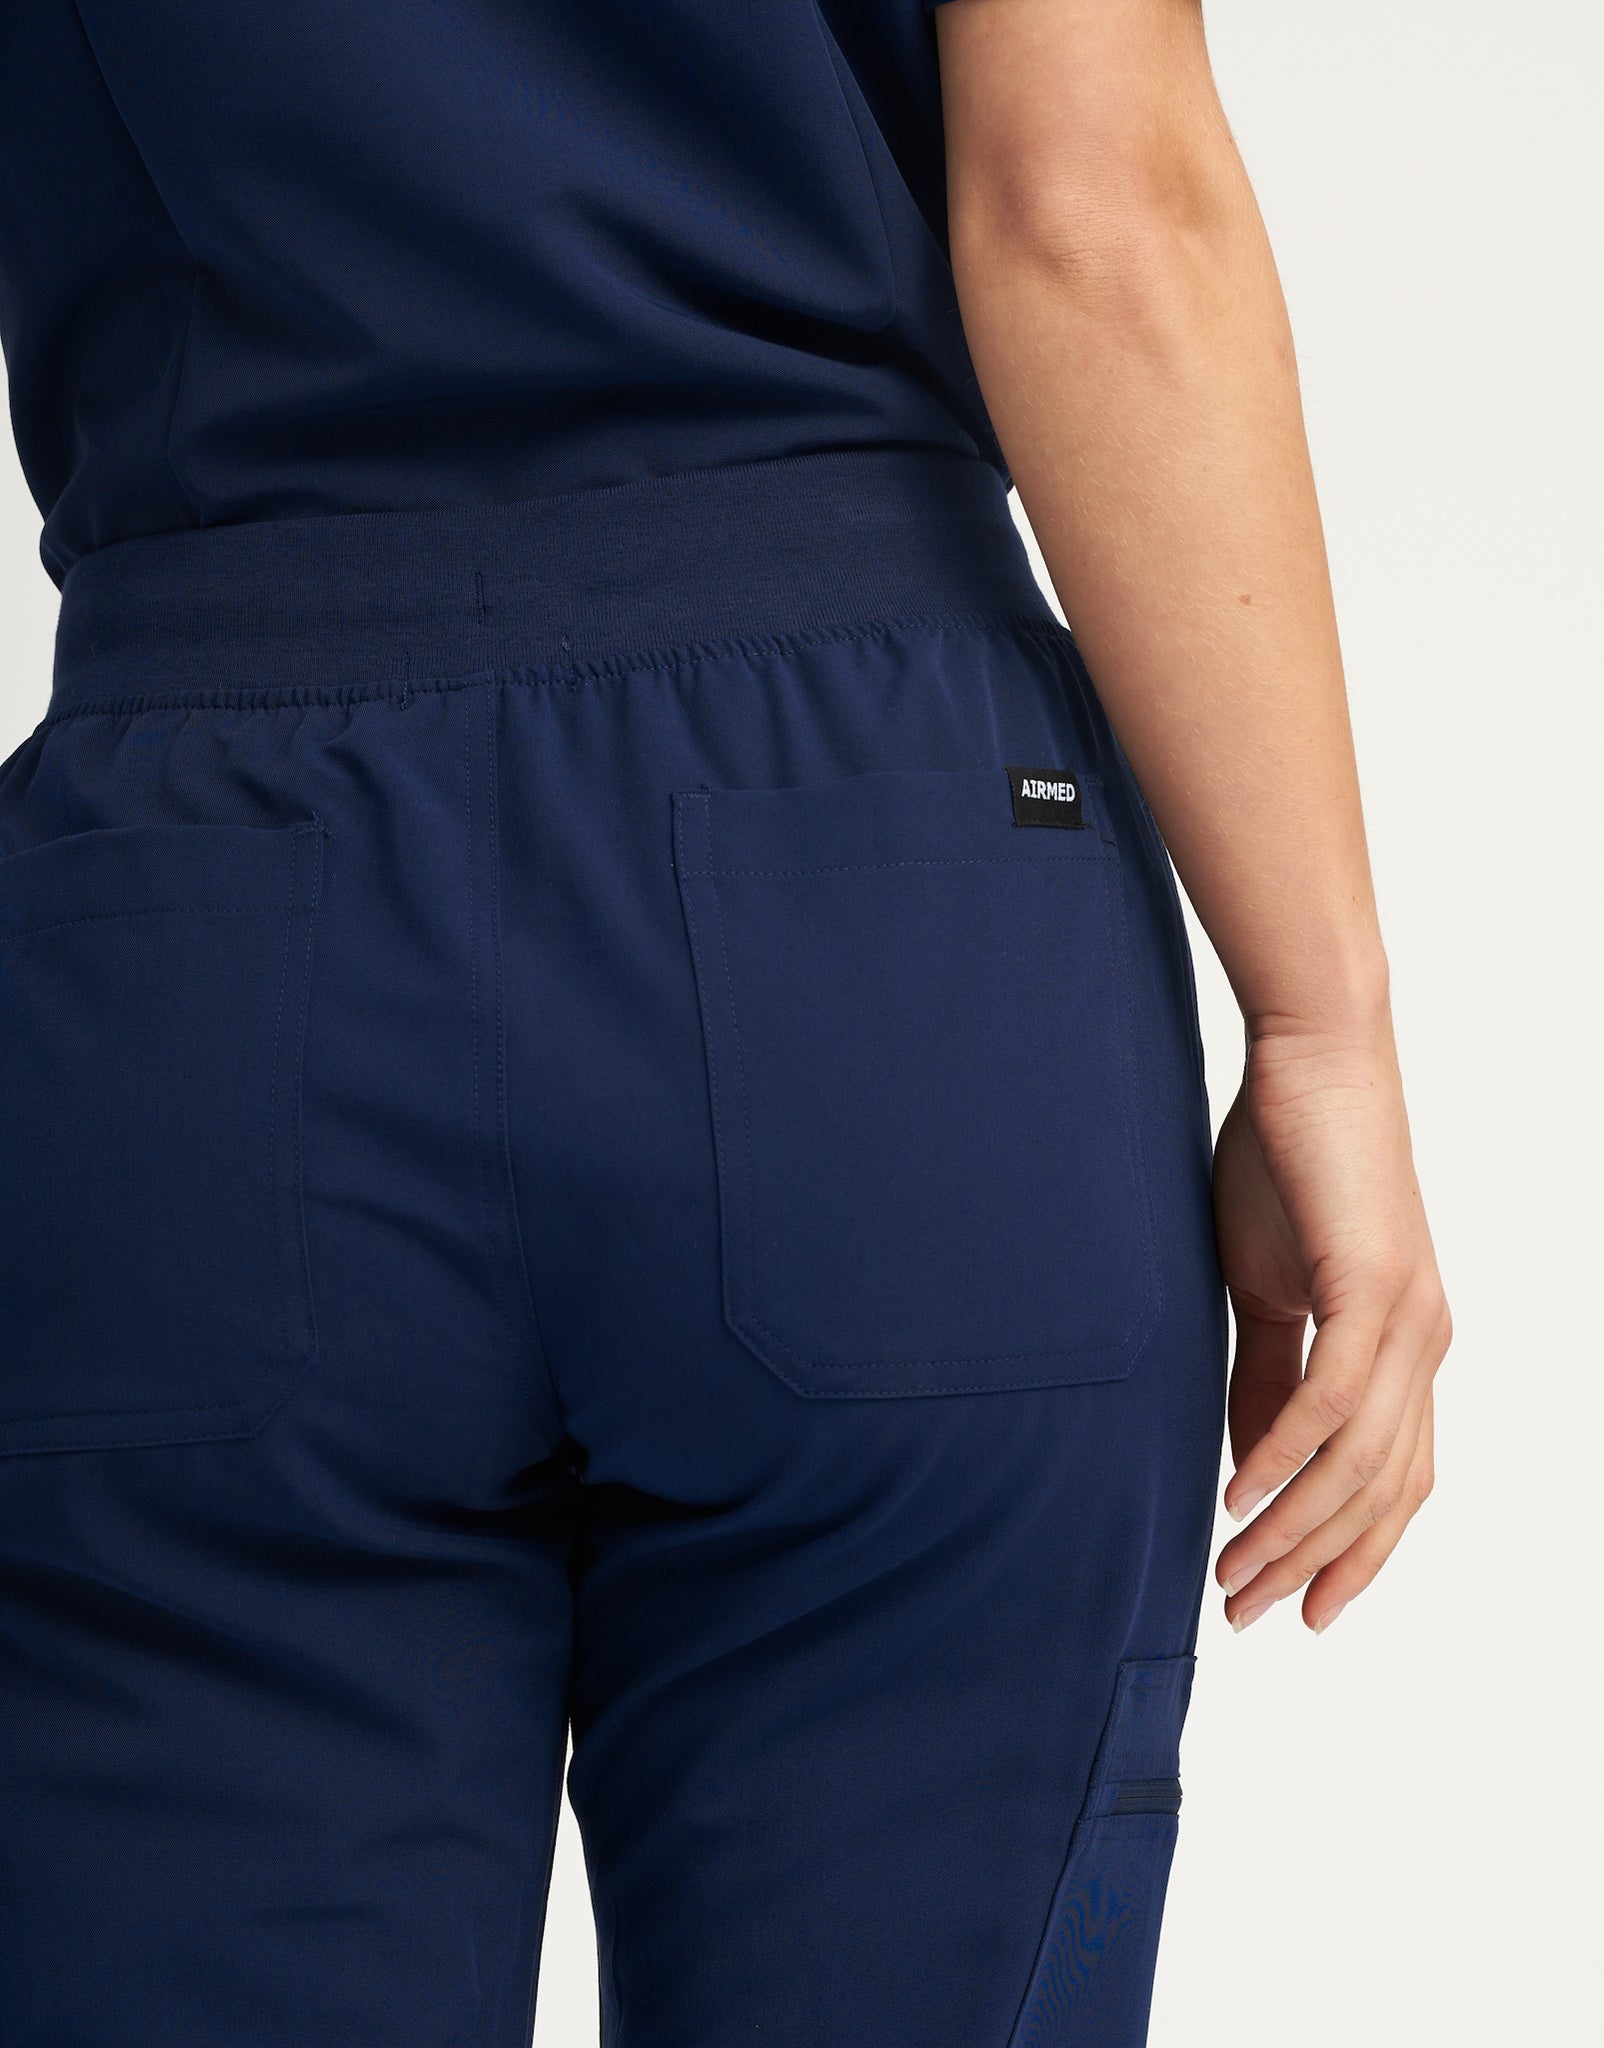 Essential Multi-Pocket Scrub Pants - True Navy